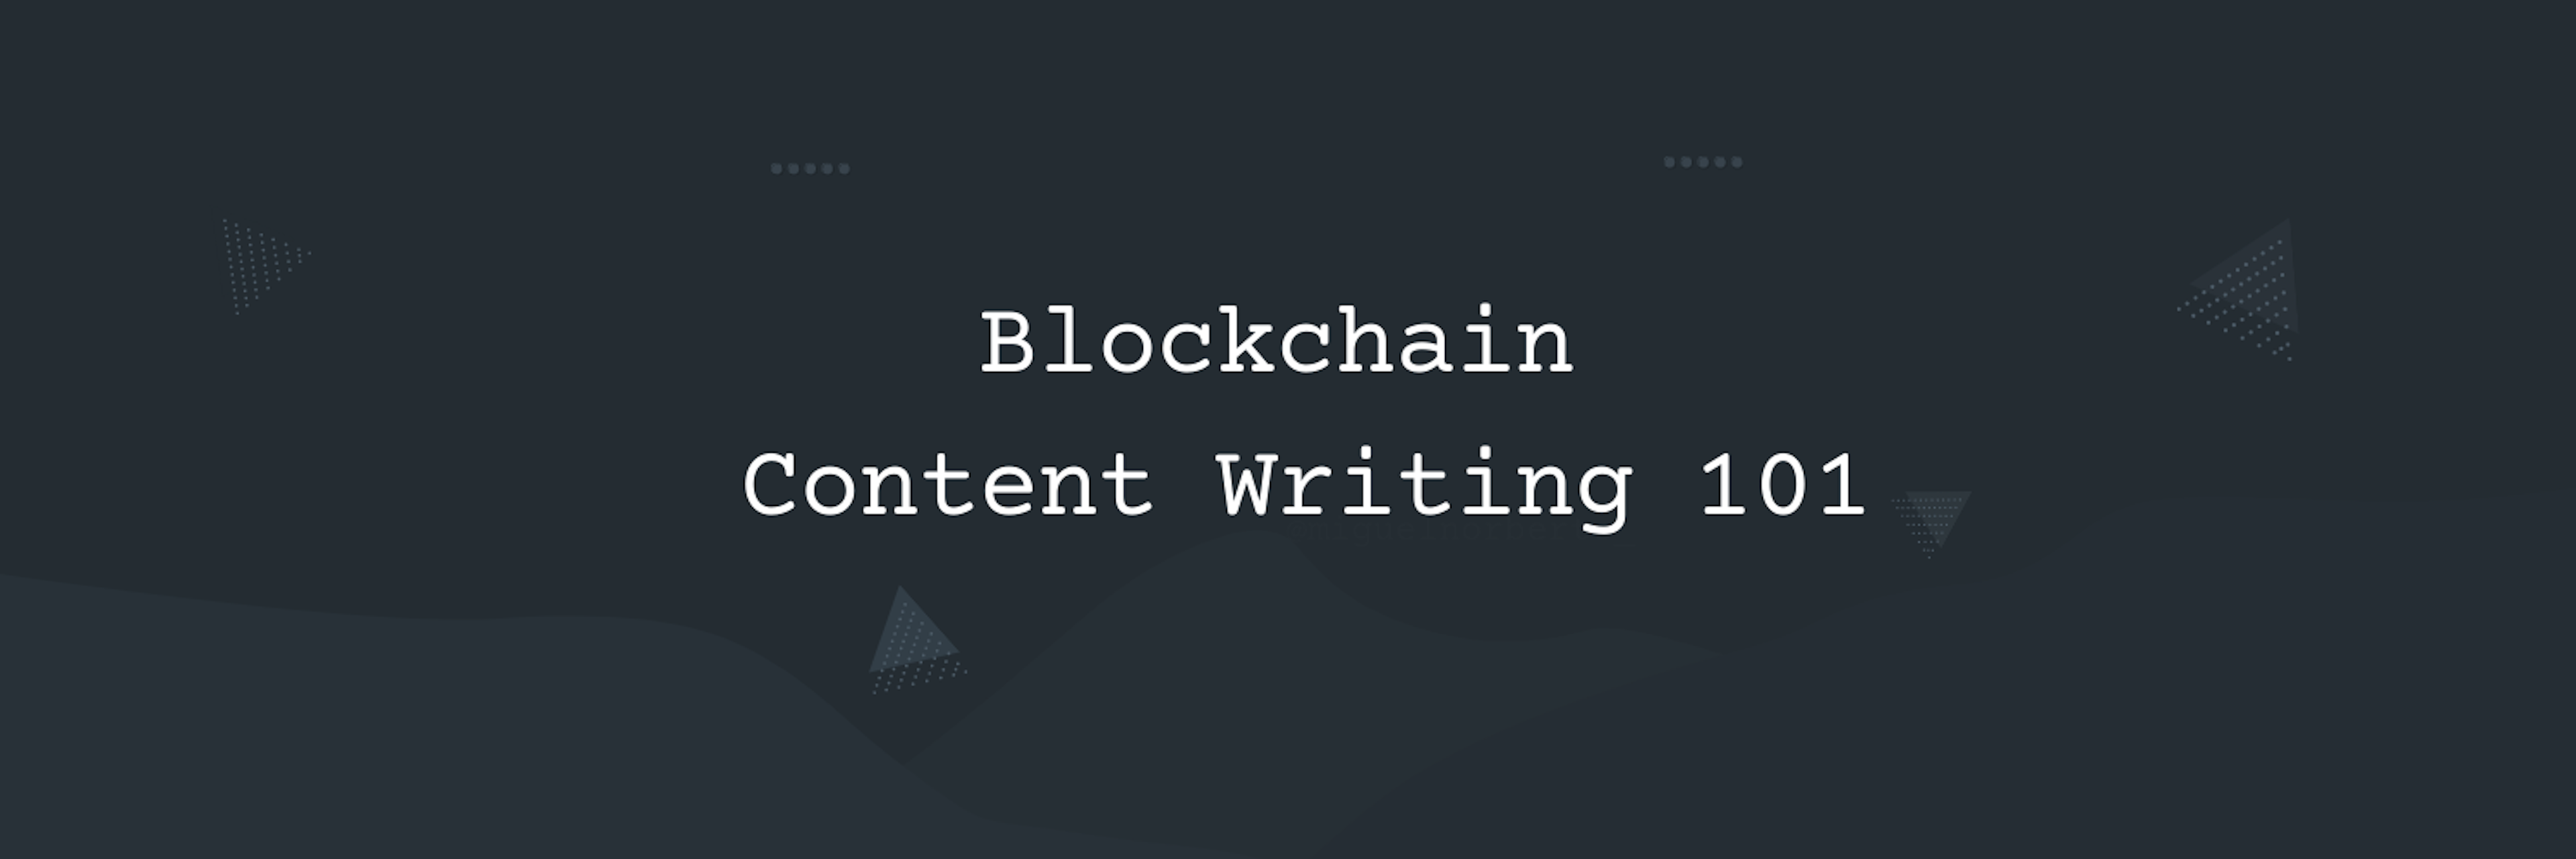 Blockchain Content Writing 101